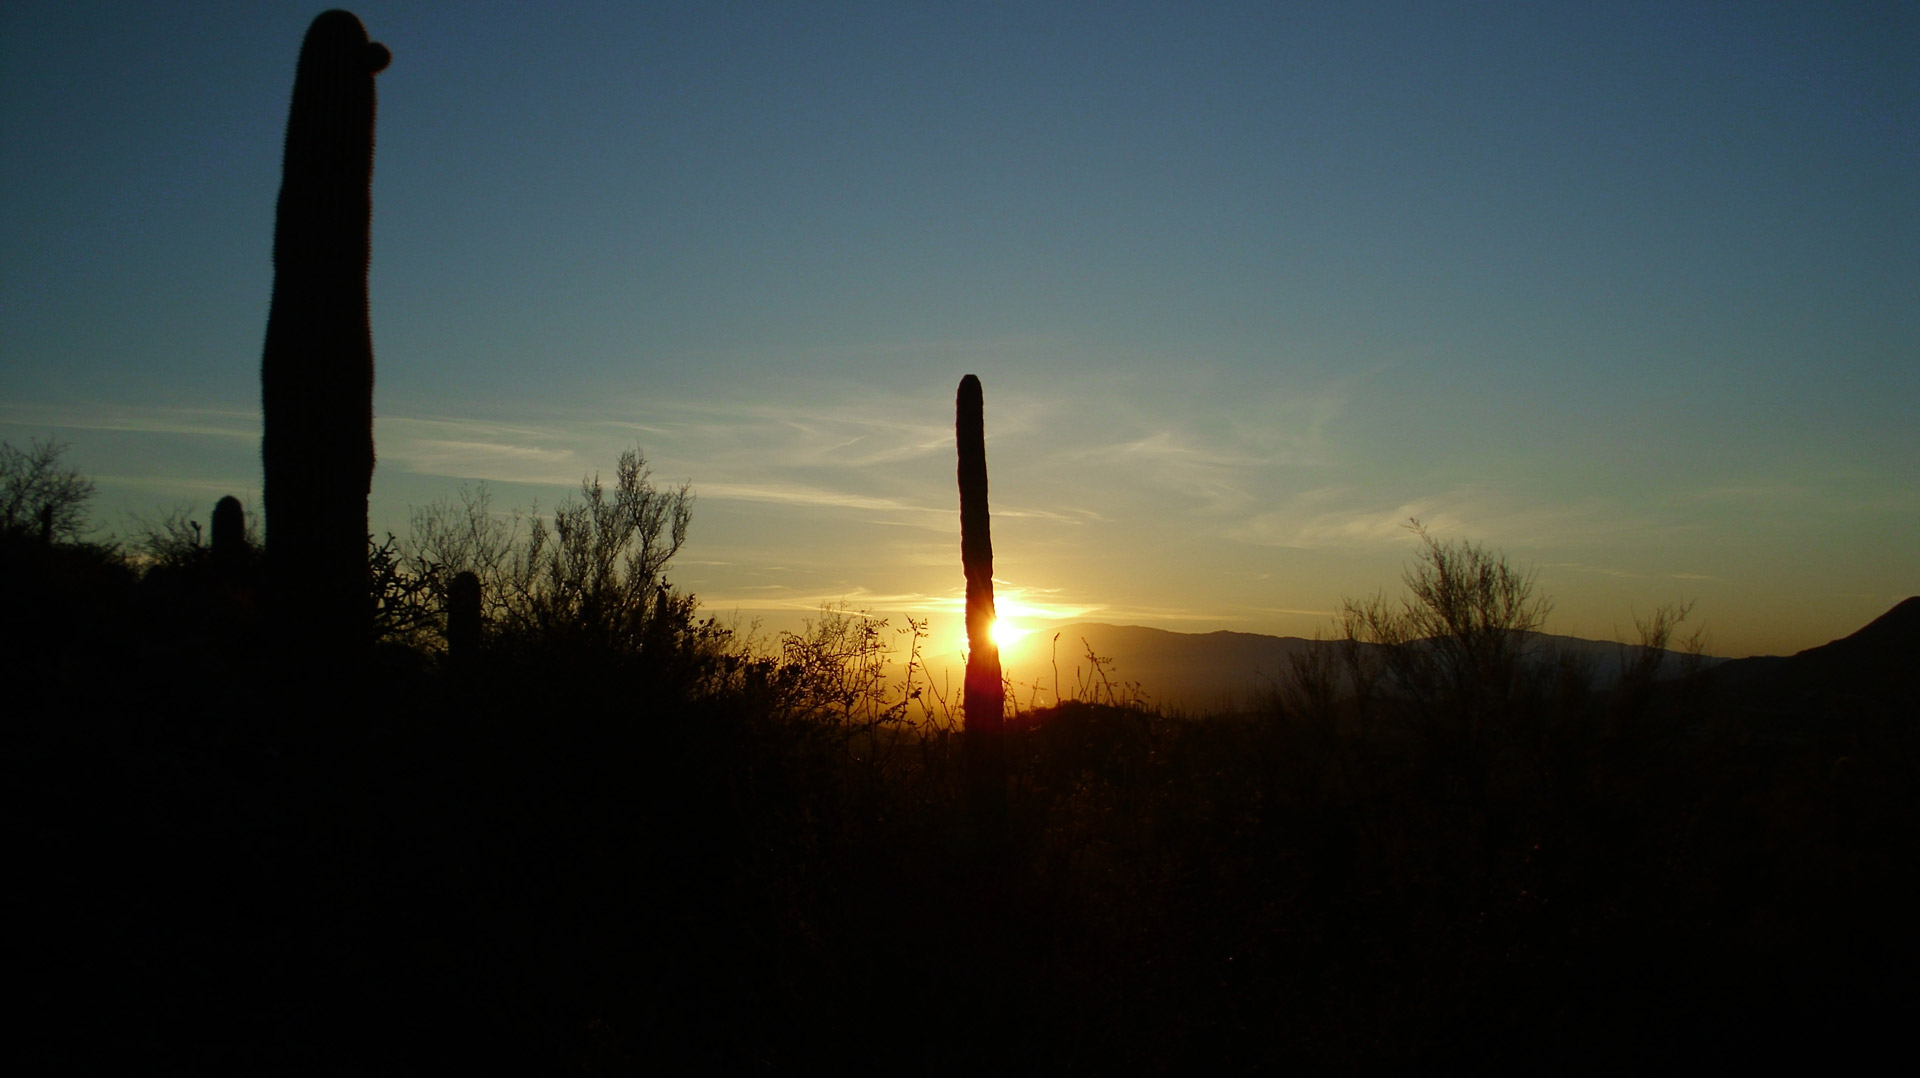 tucson-sunrise-2012-free-stock-photo-public-domain-pictures